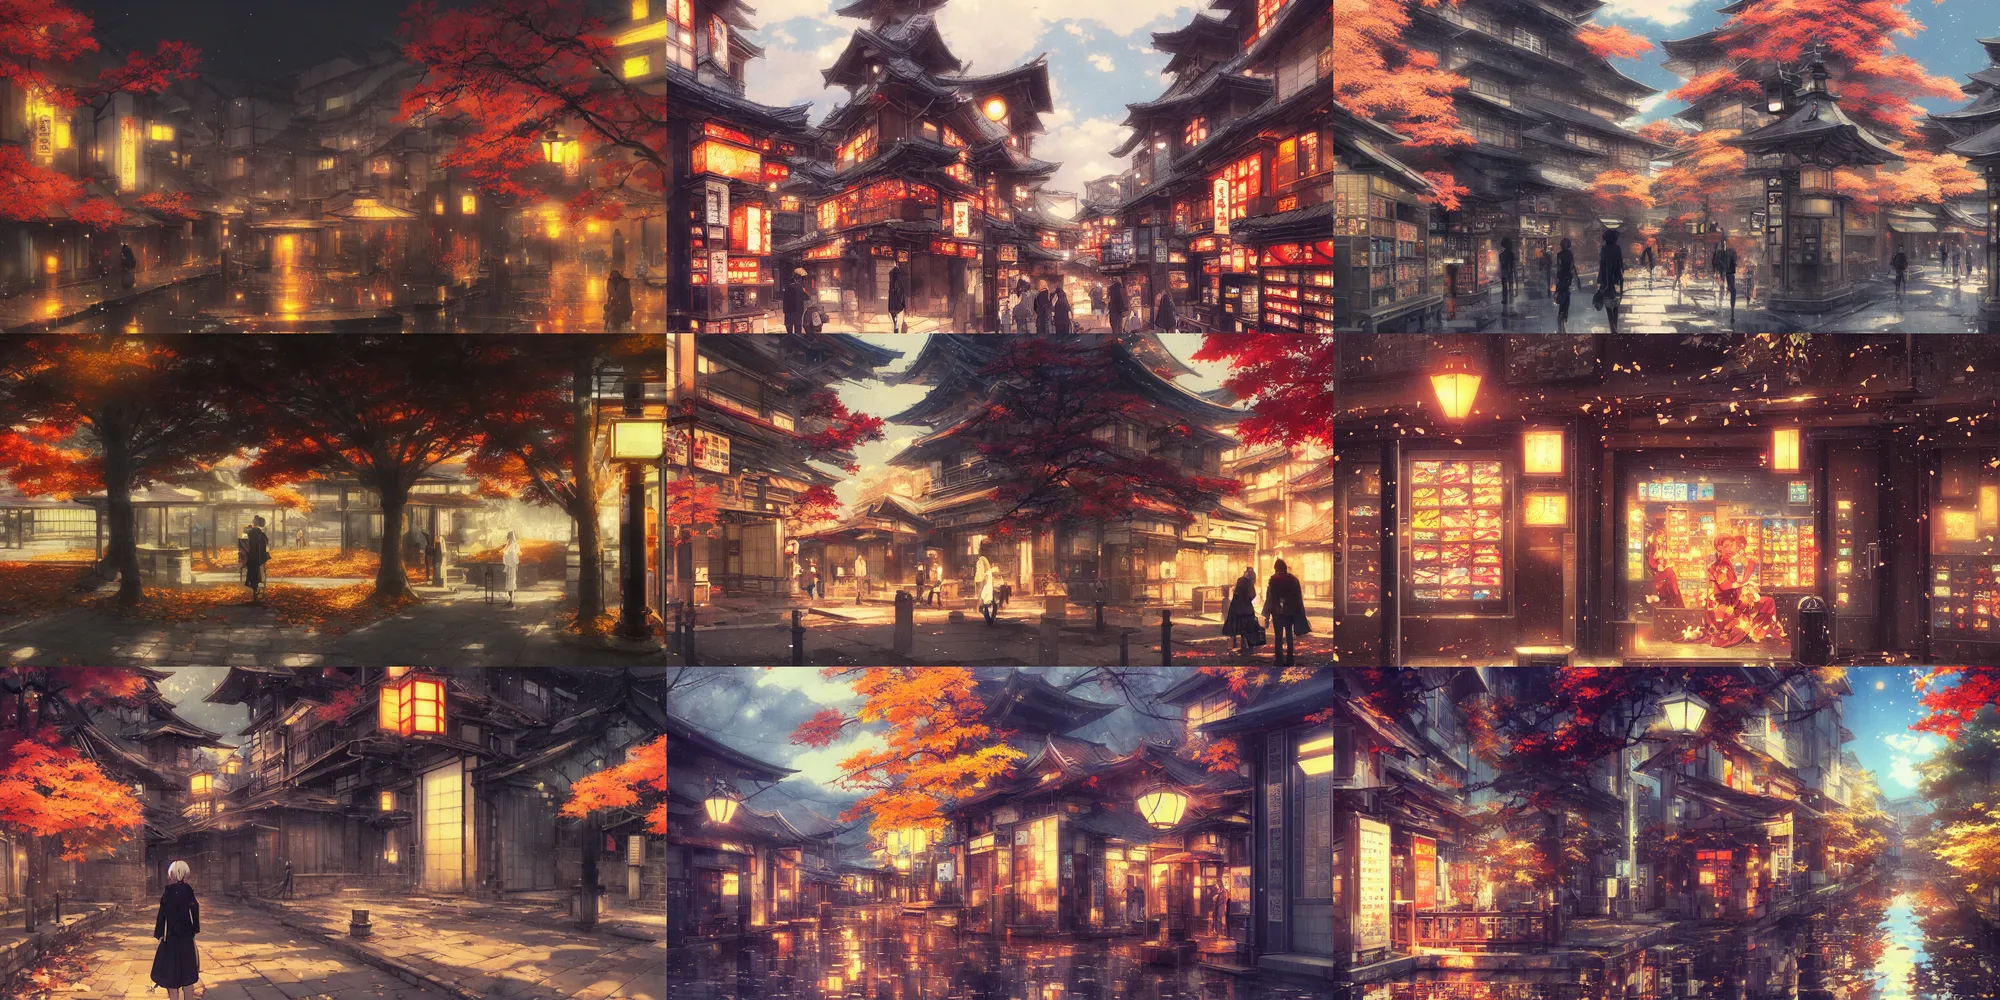 Prompt: anime visual kyoto by greg rutkowski, autumn, night, vending machine